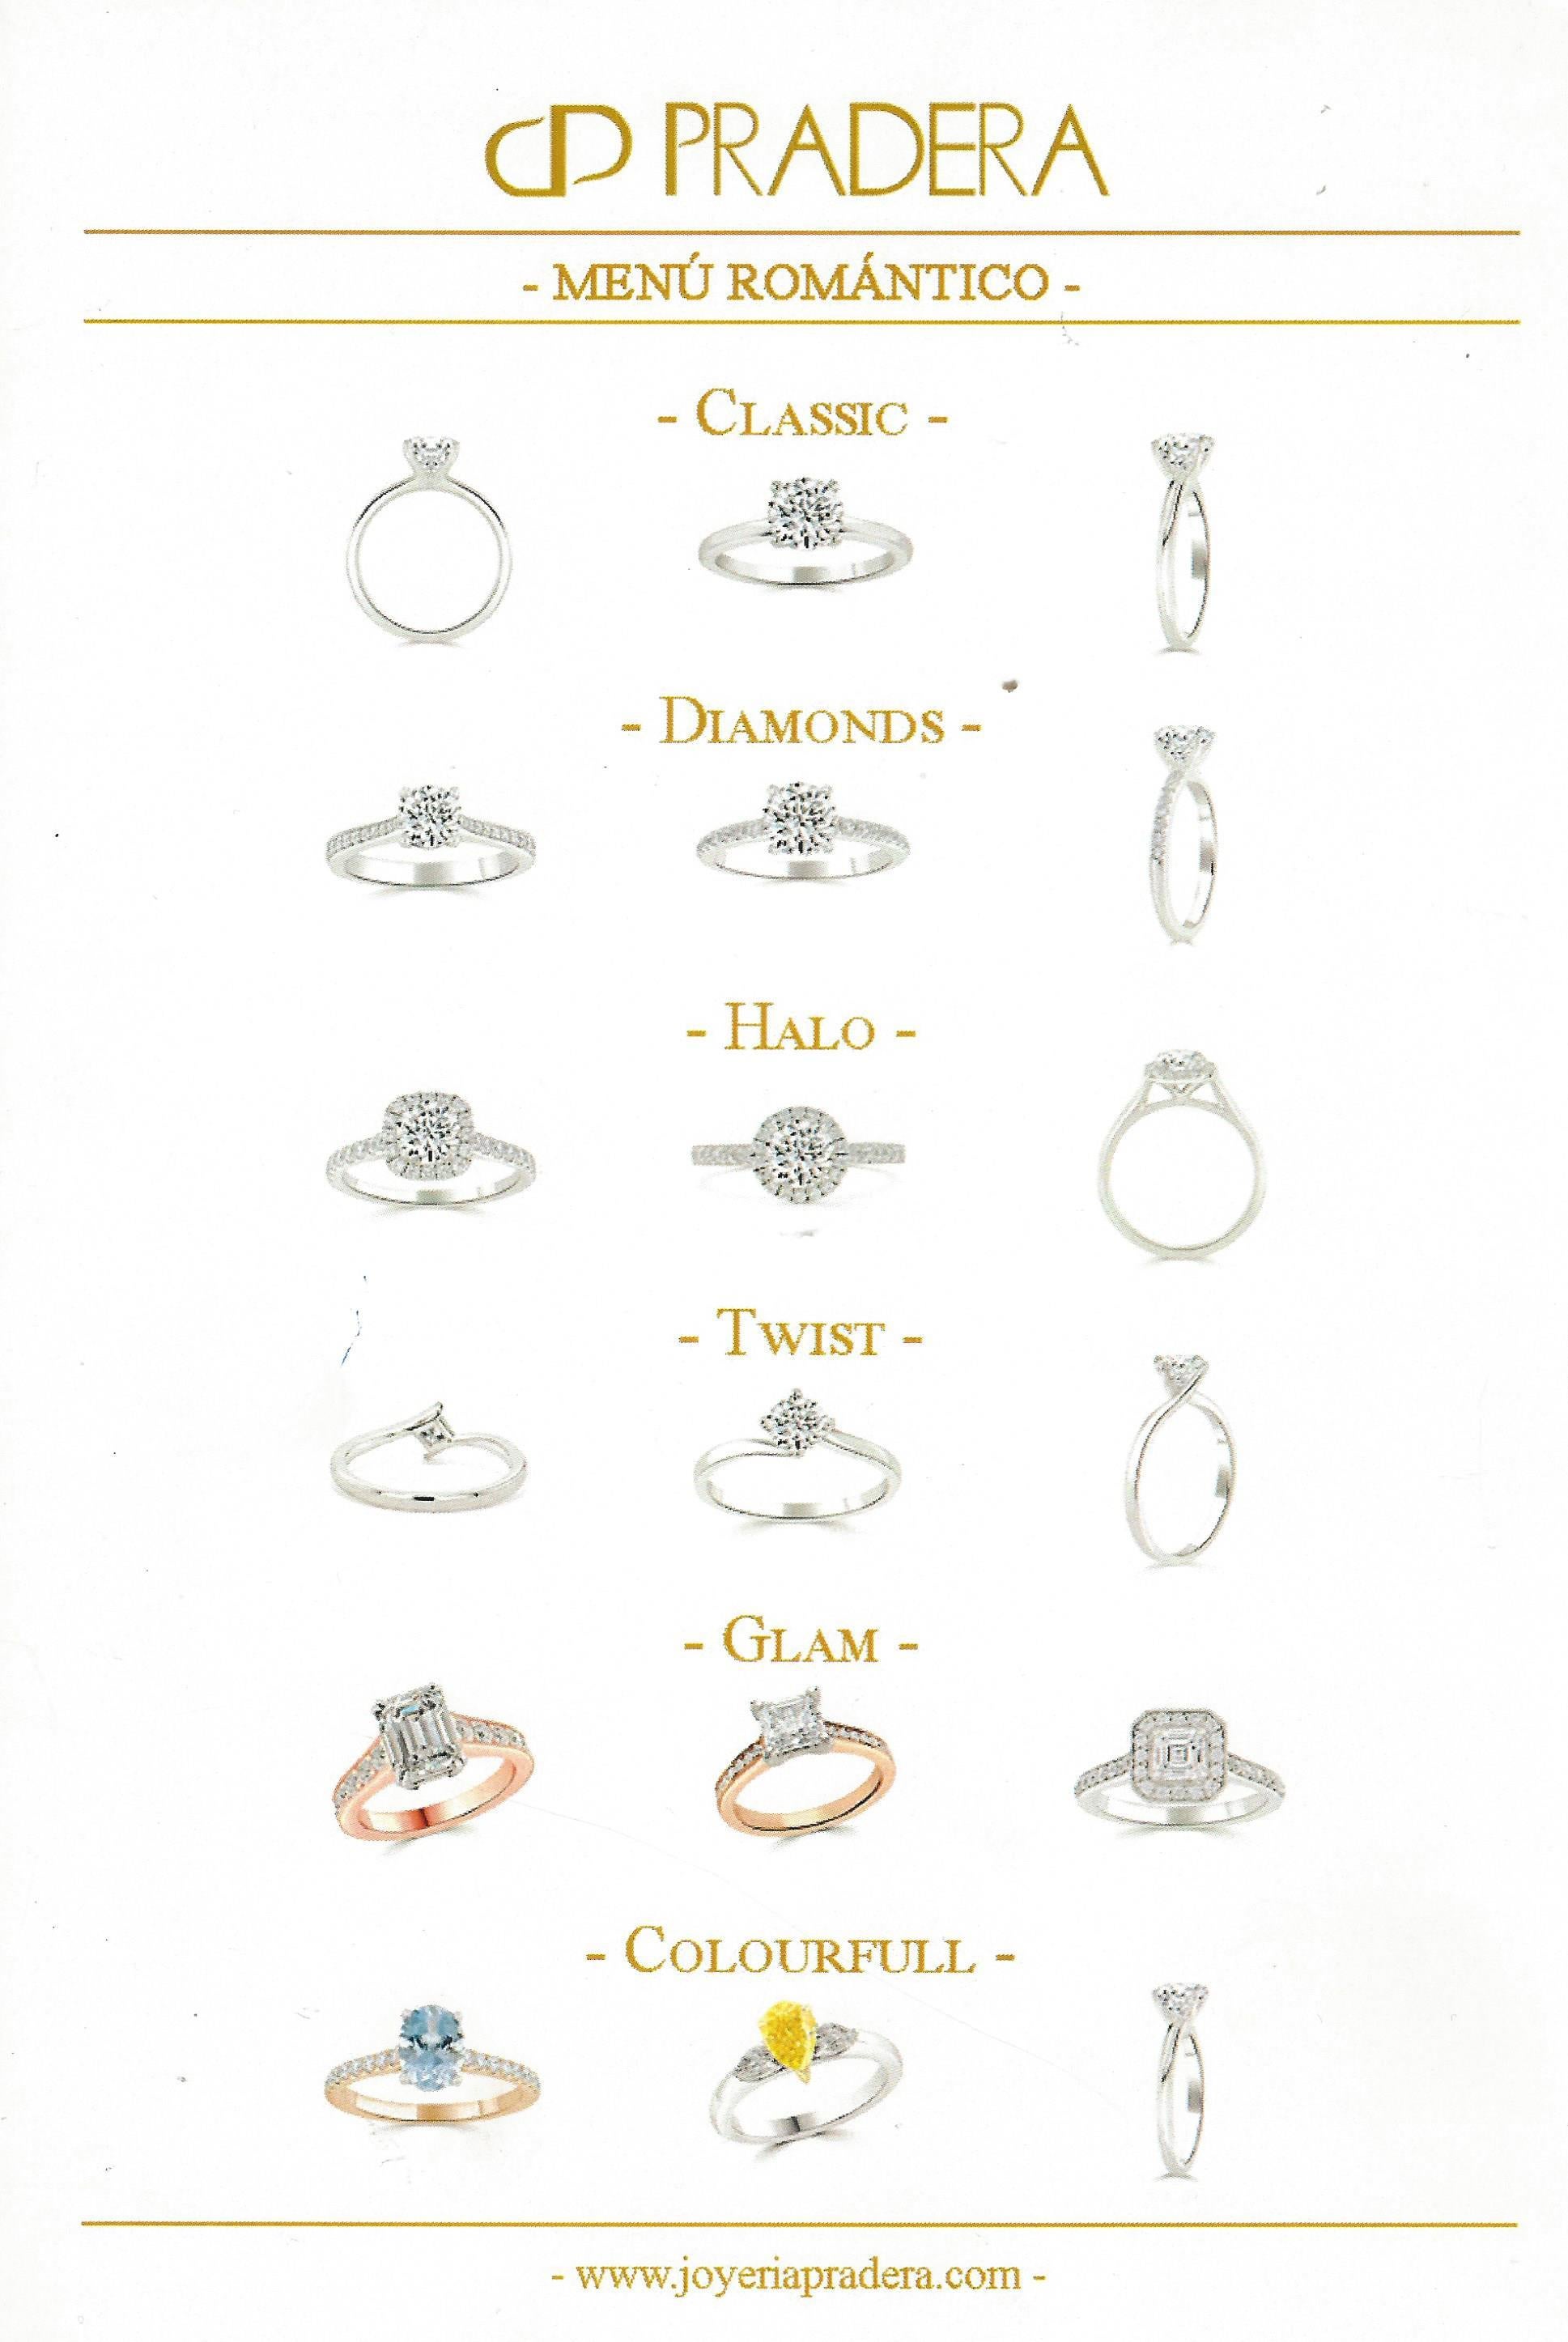 En vente :  Bague de fiançailles Pradera en or blanc 18 carats avec halo de diamants 4